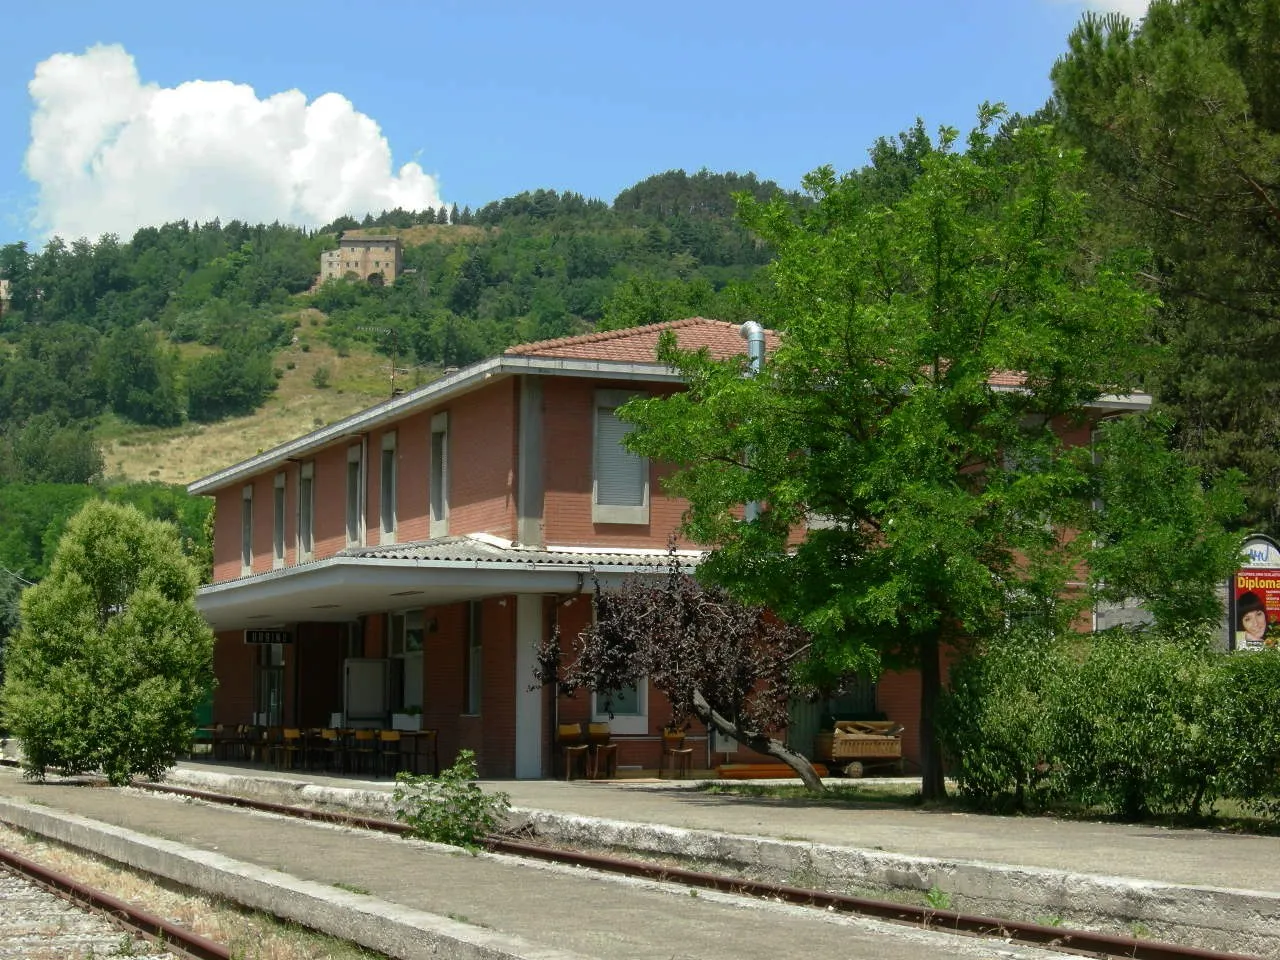 Photo showing: l'ex stazione ferroviaria di Urbino